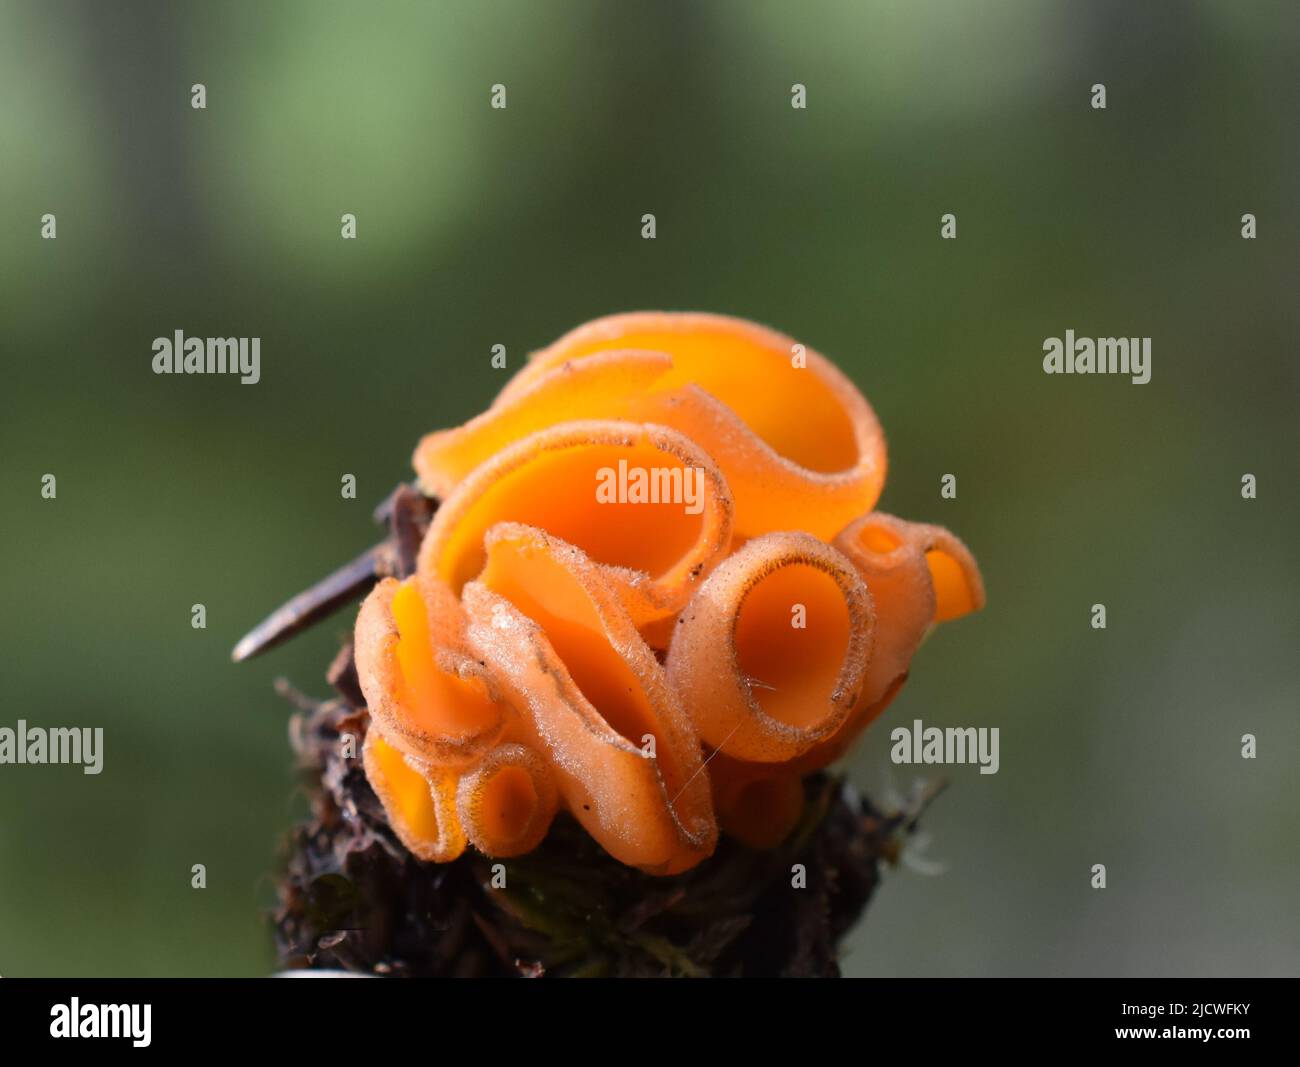 The orange peel fungus Aurantia aleuri Stock Photo